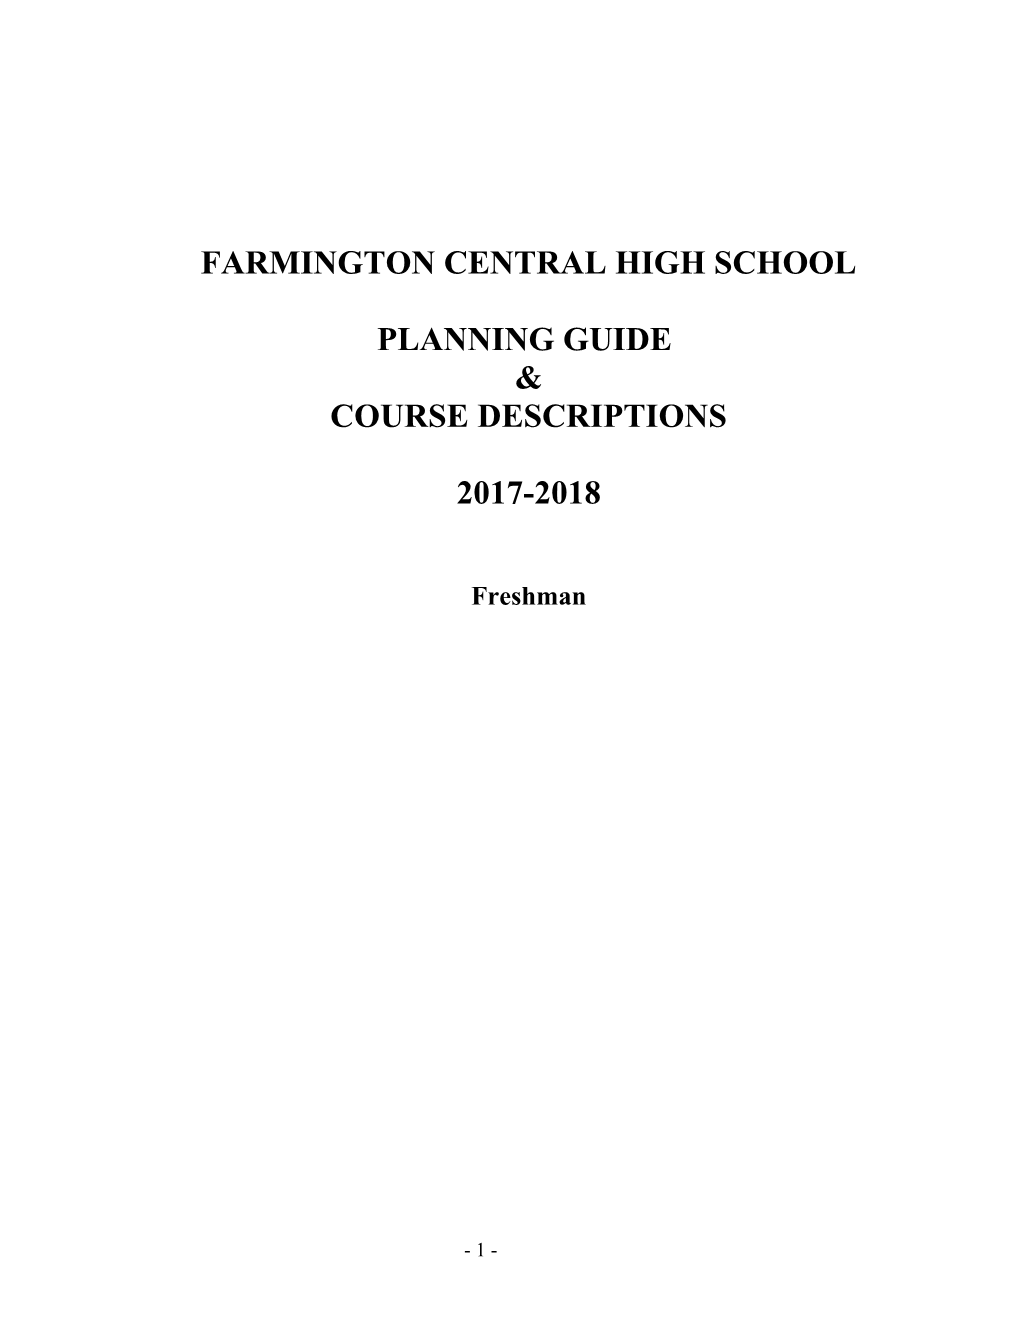 Farmington Central High School